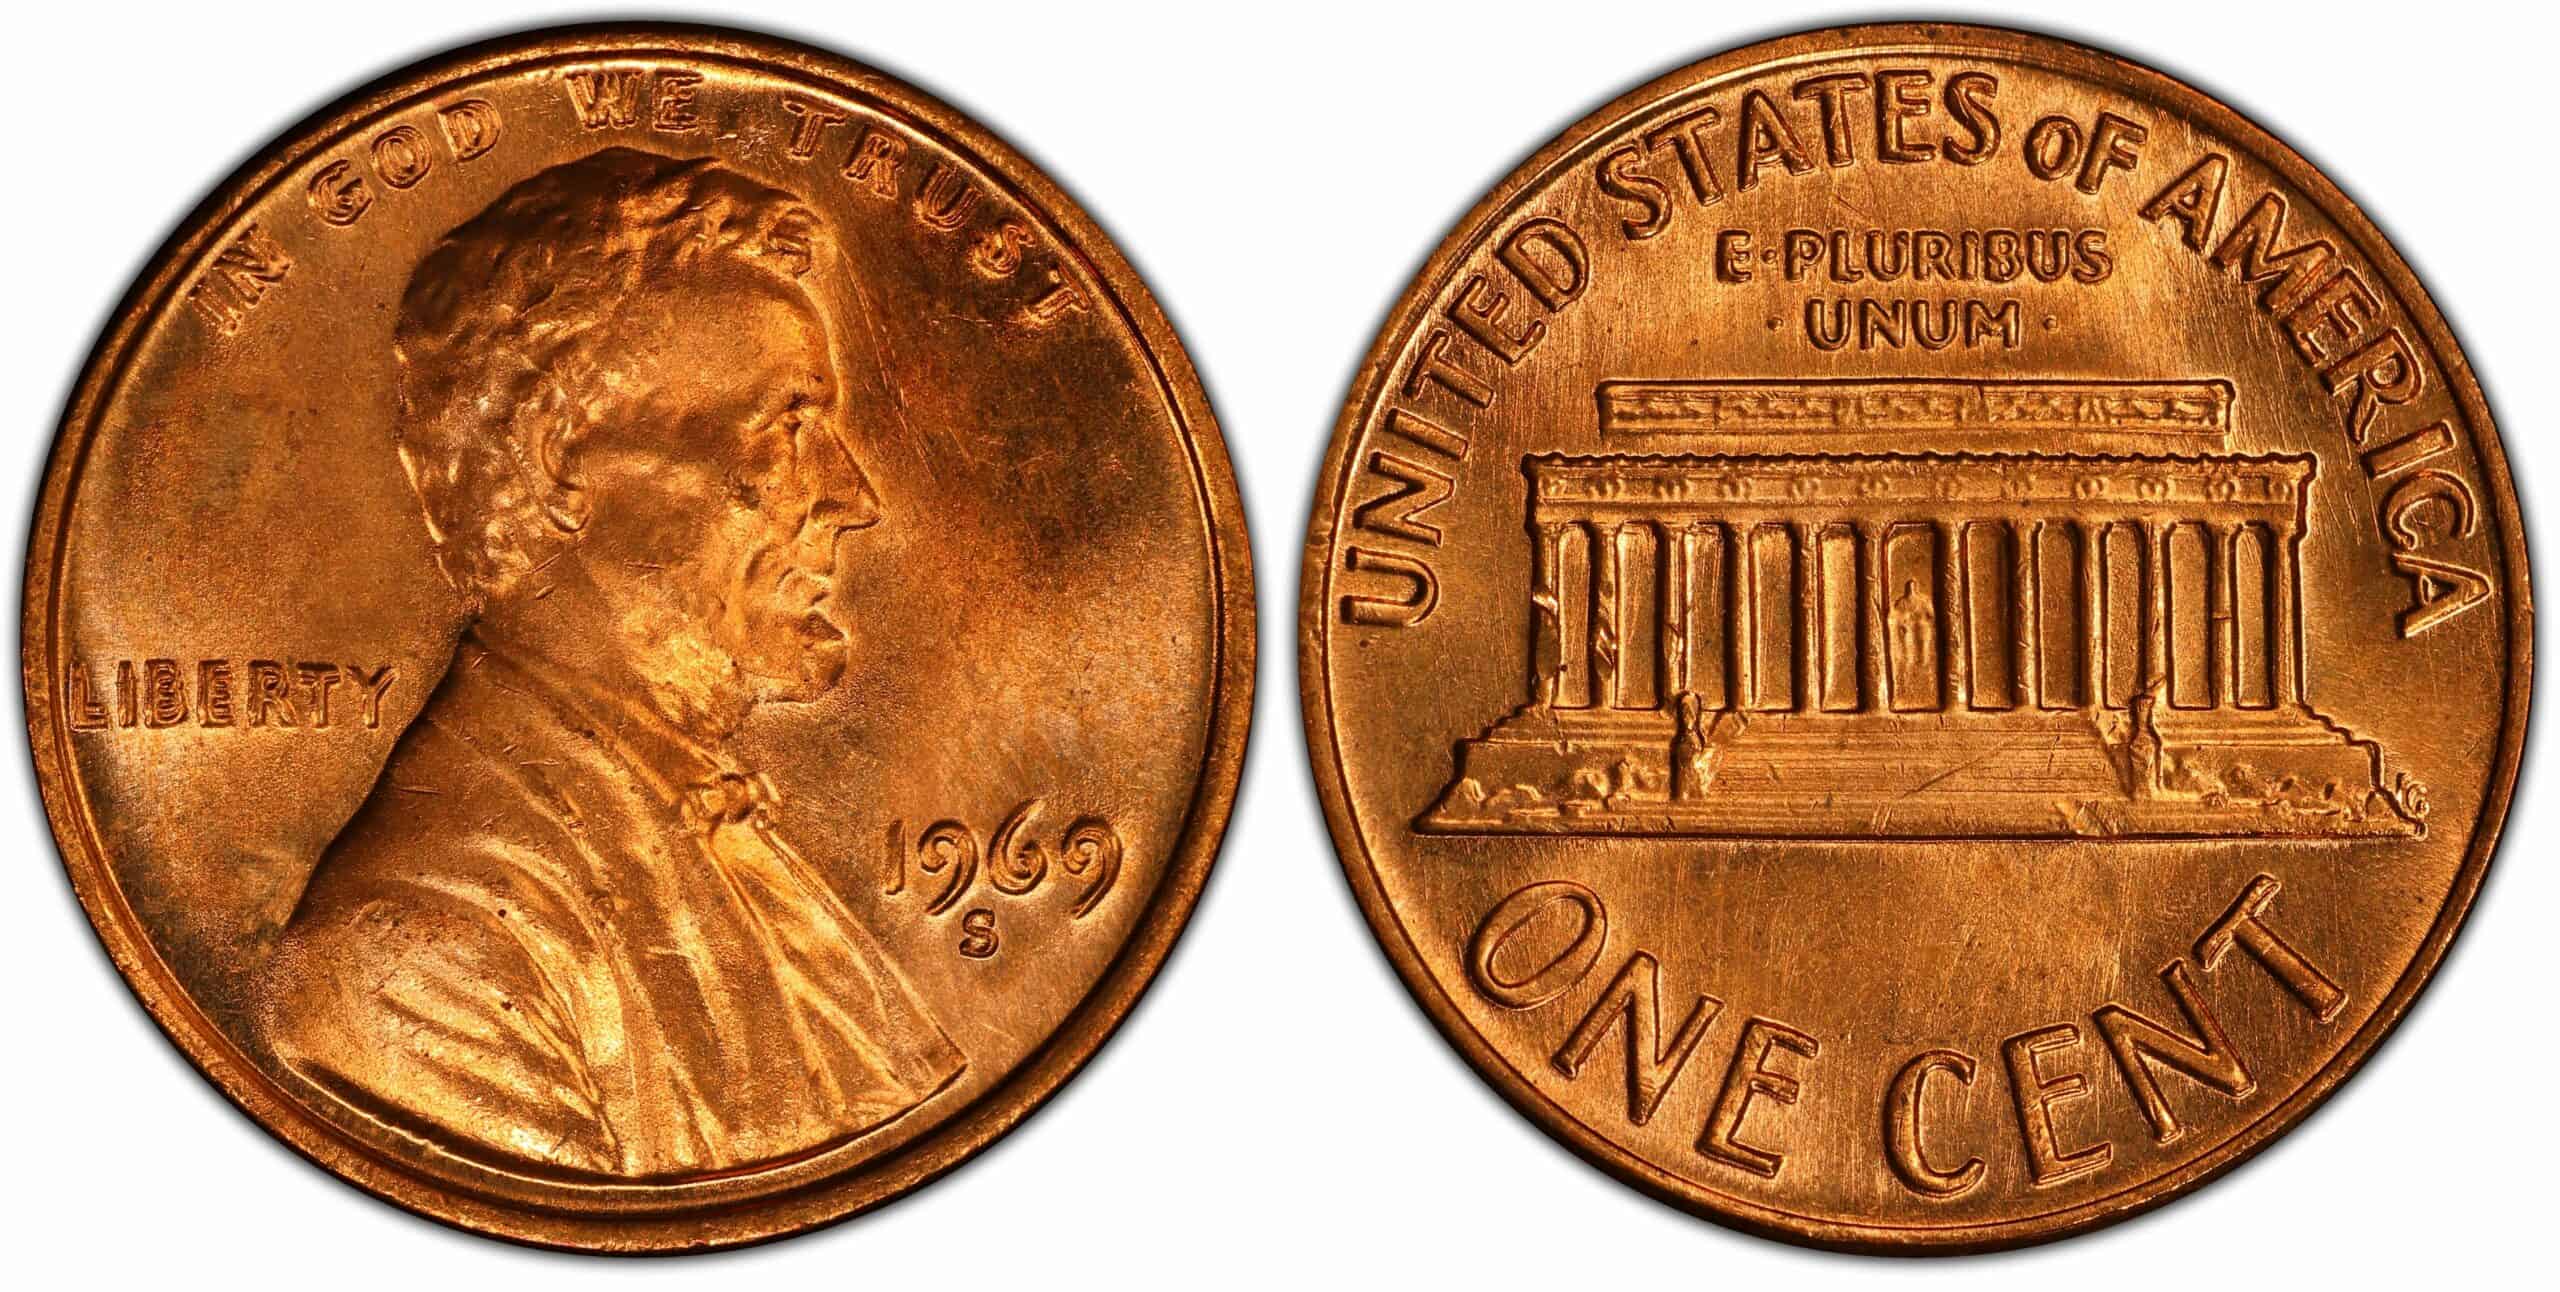 1969 Penny Doubled Die Error